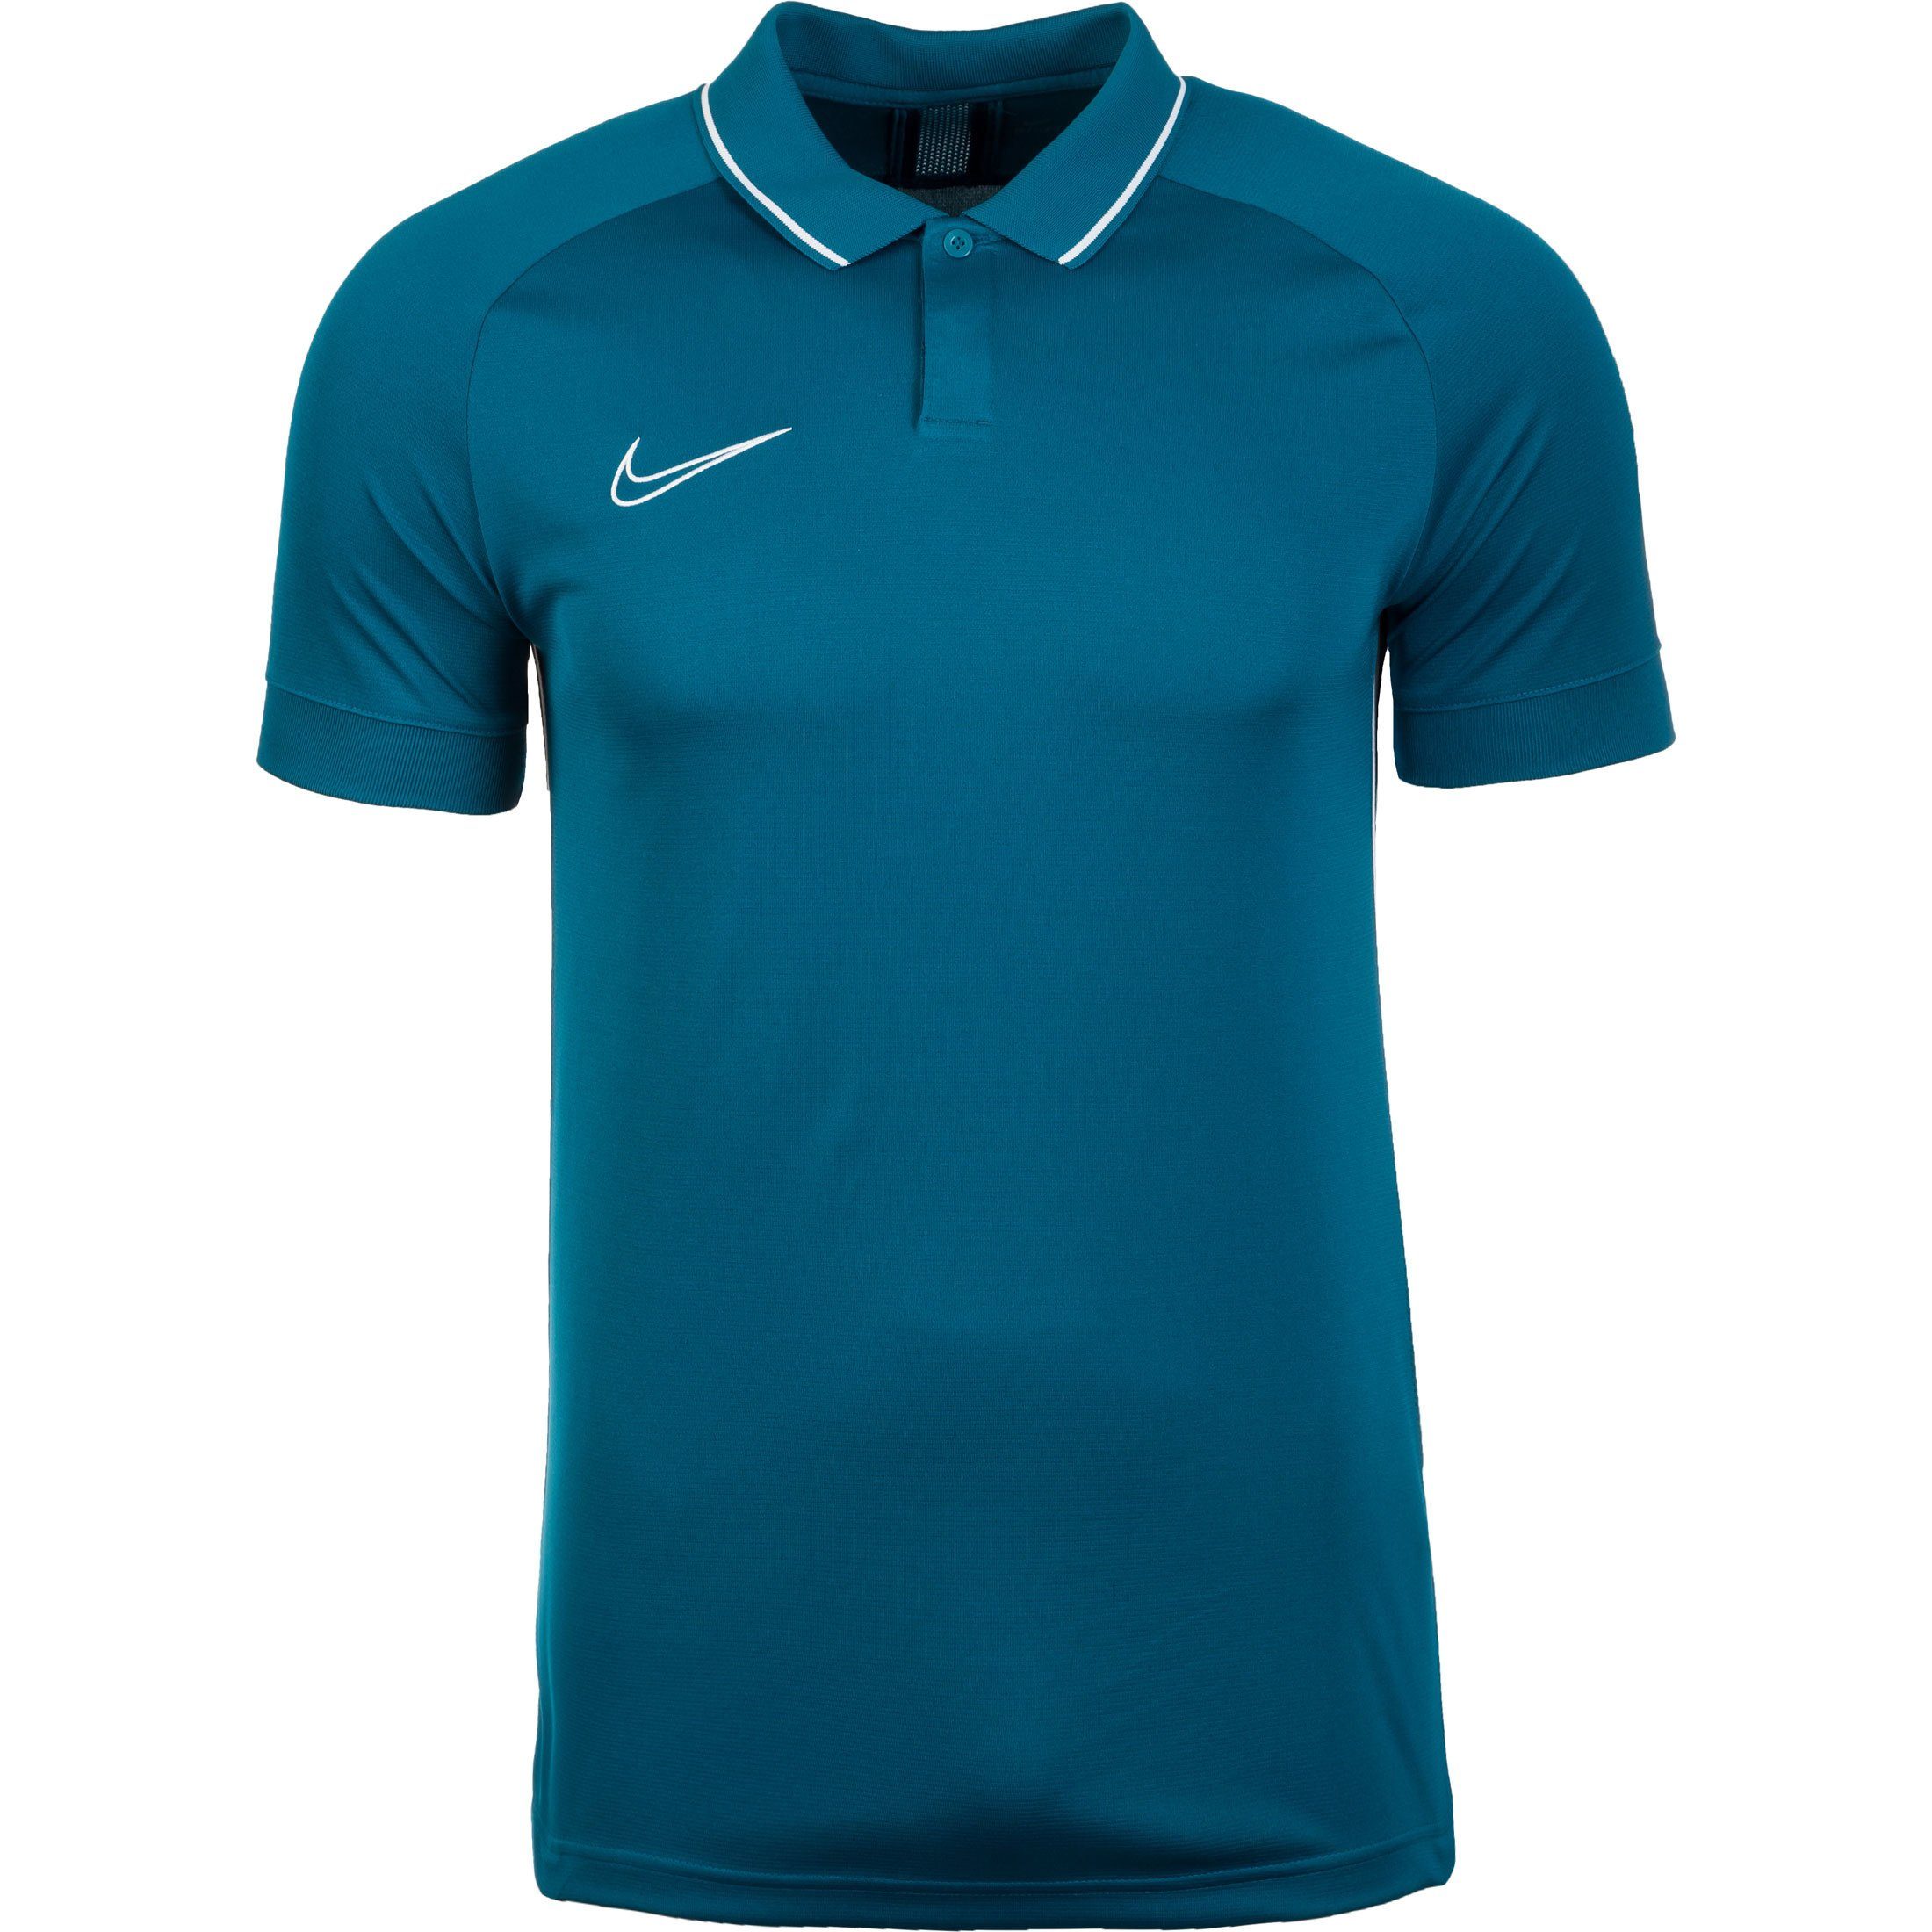 Nike Poloshirt »Academy 19«, Hohe Strapazierfähigkeit online kaufen | OTTO